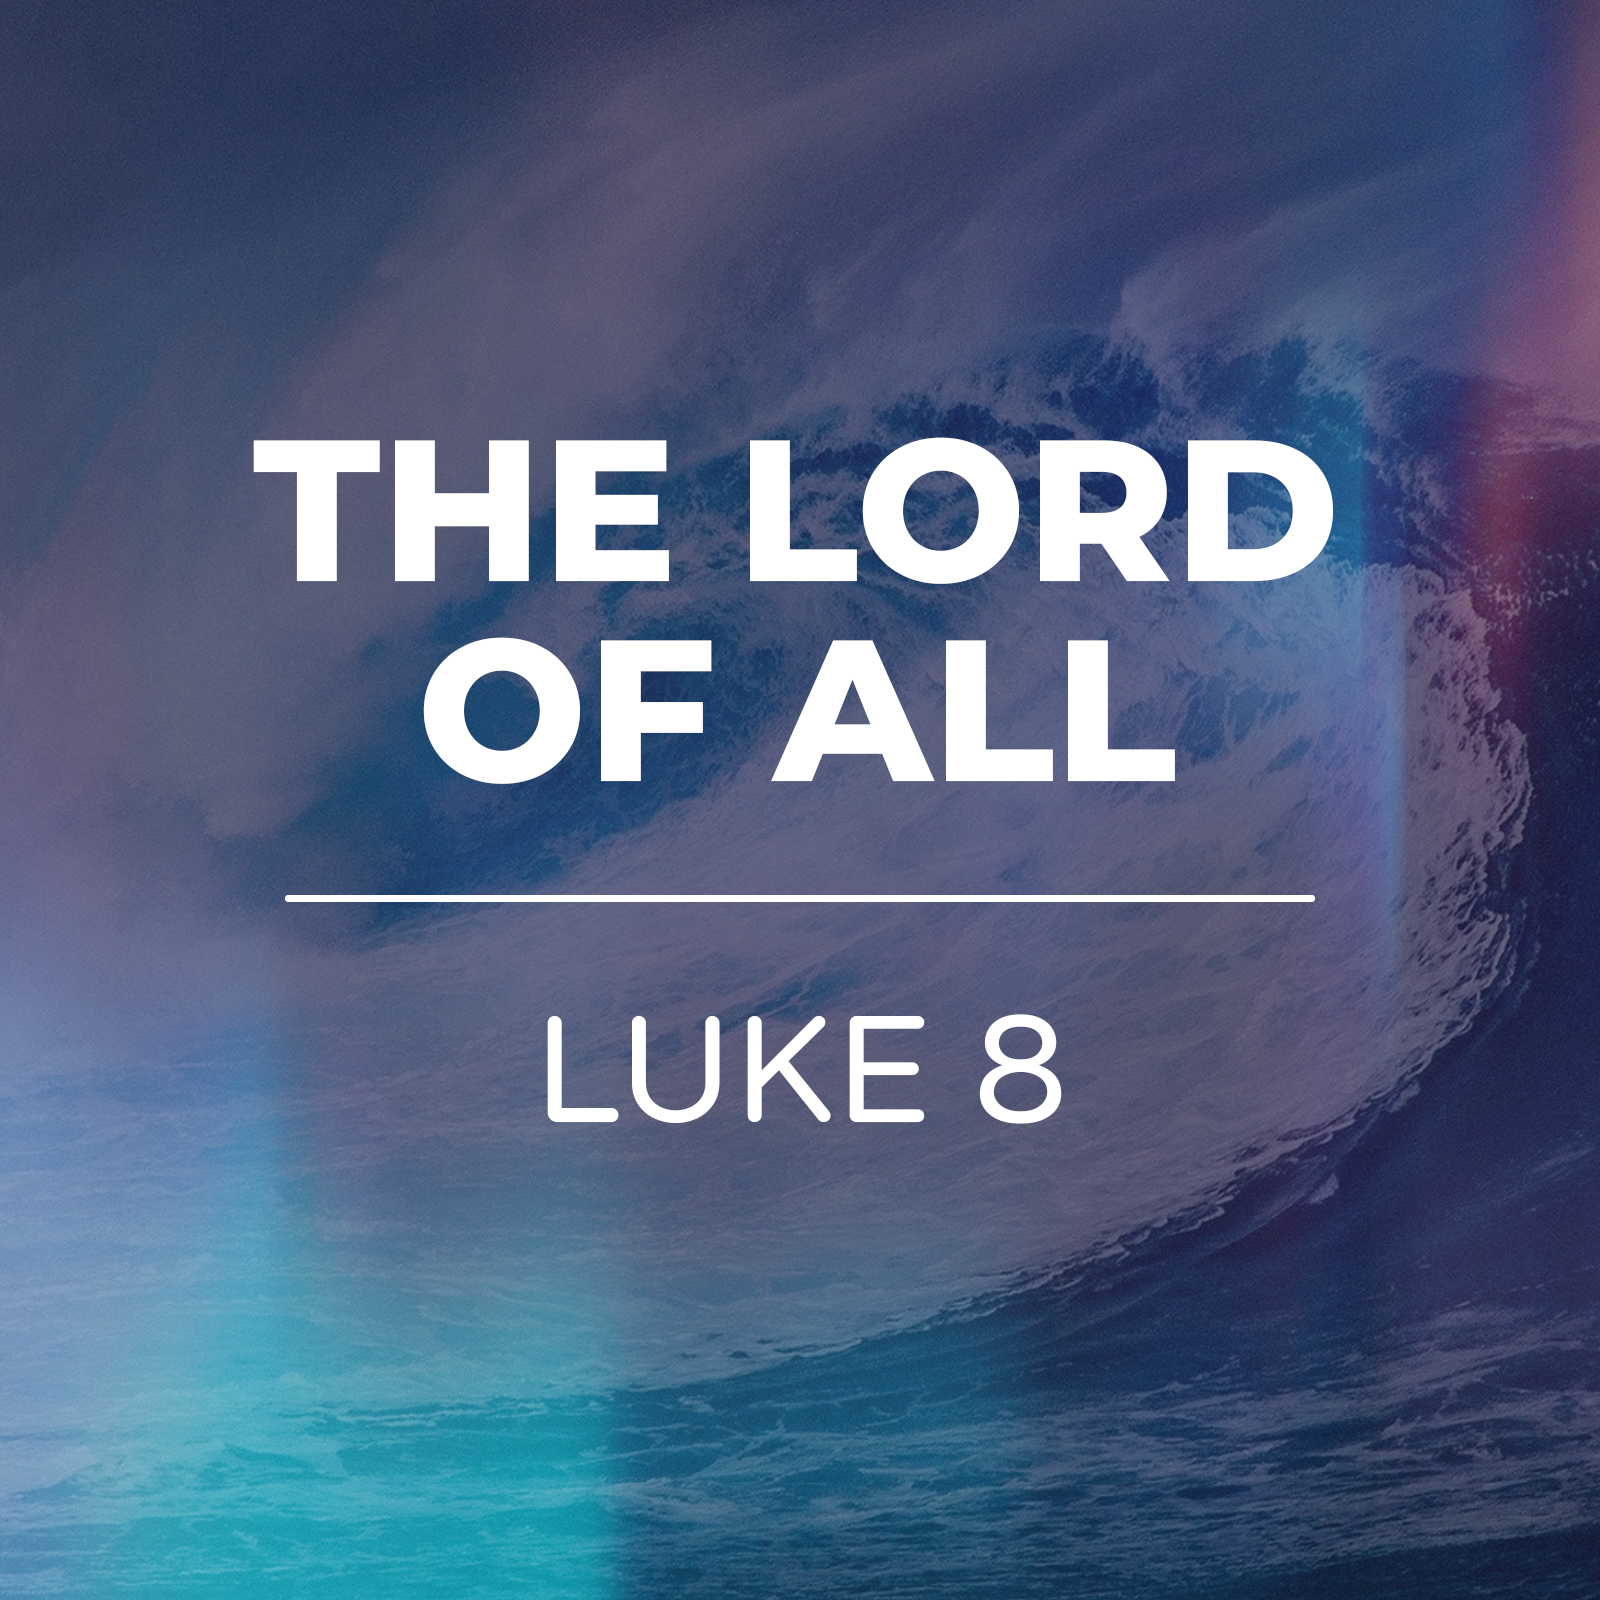 The lord of all - Luke 8 Sermon series